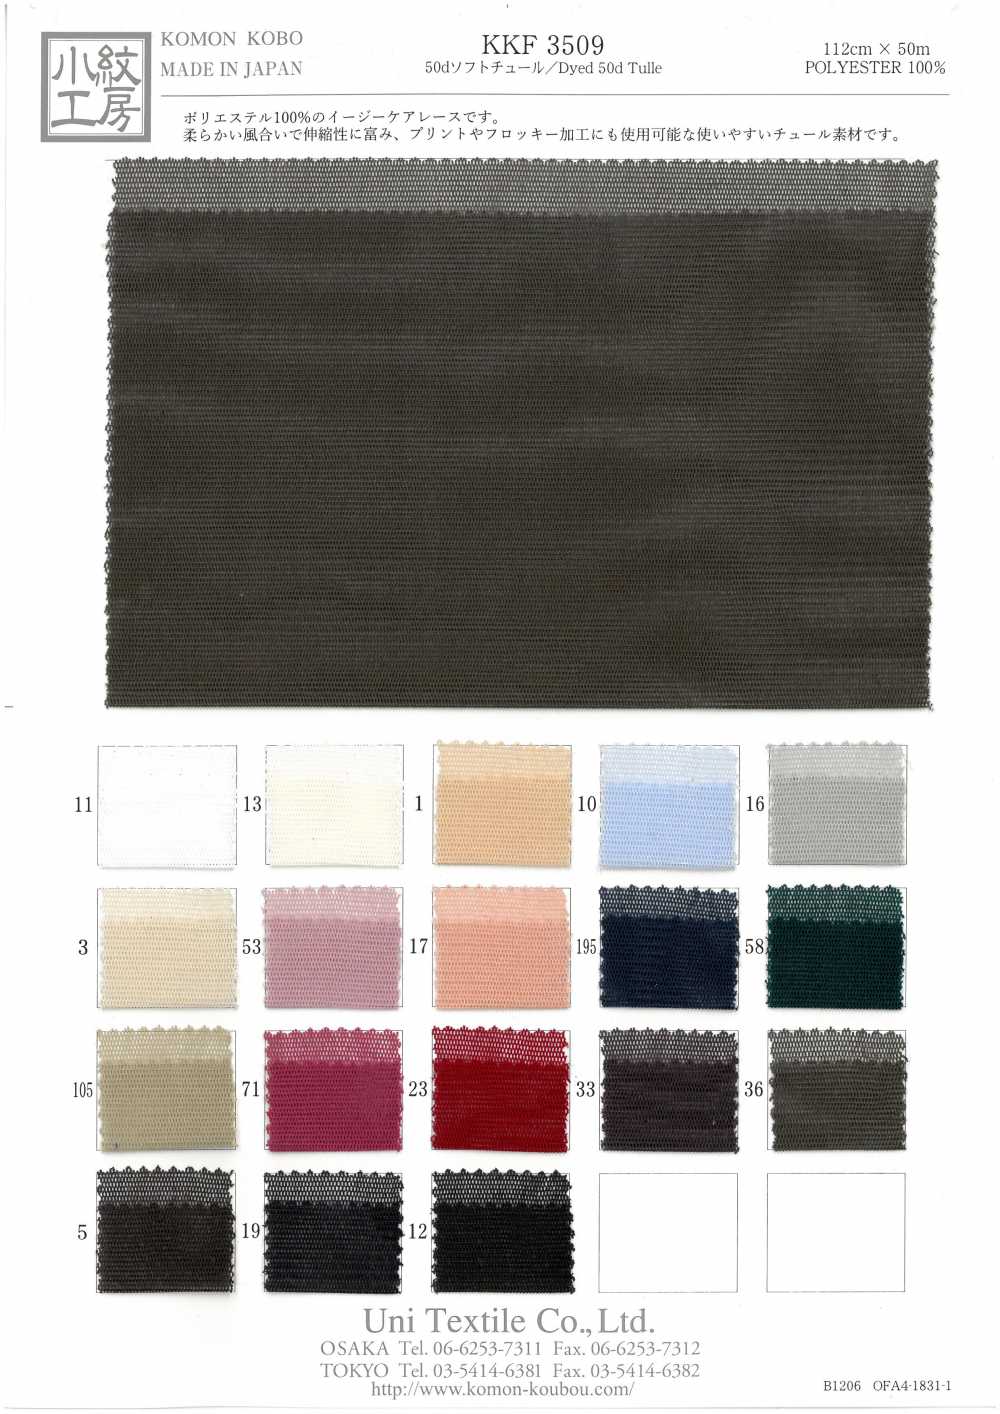 KKF3509 50d Soft Tulle[Textile / Fabric] Uni Textile